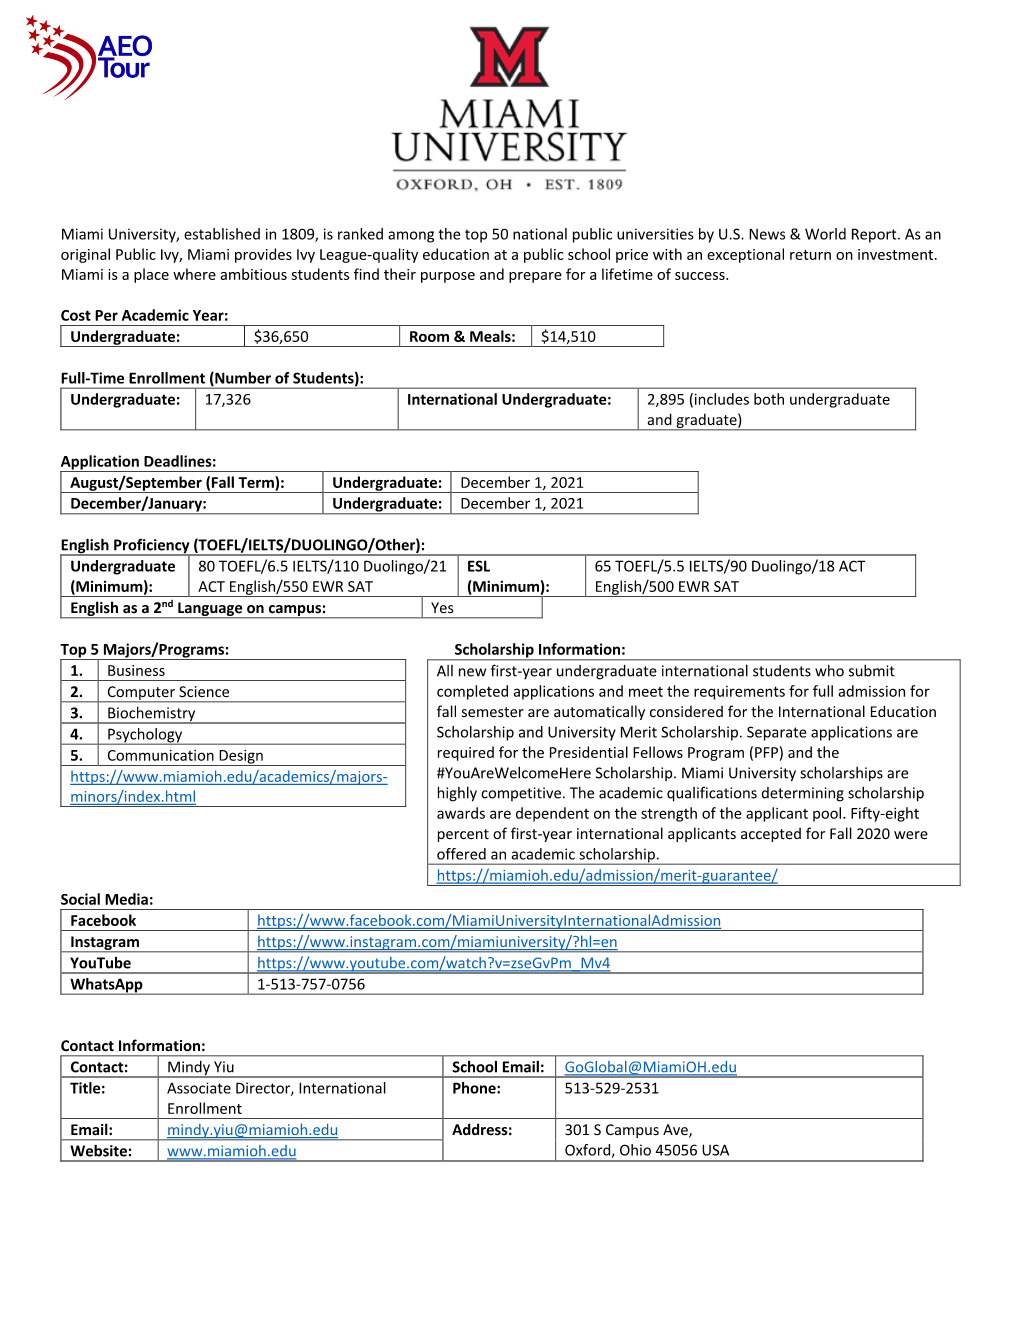 Miami University Information Guide